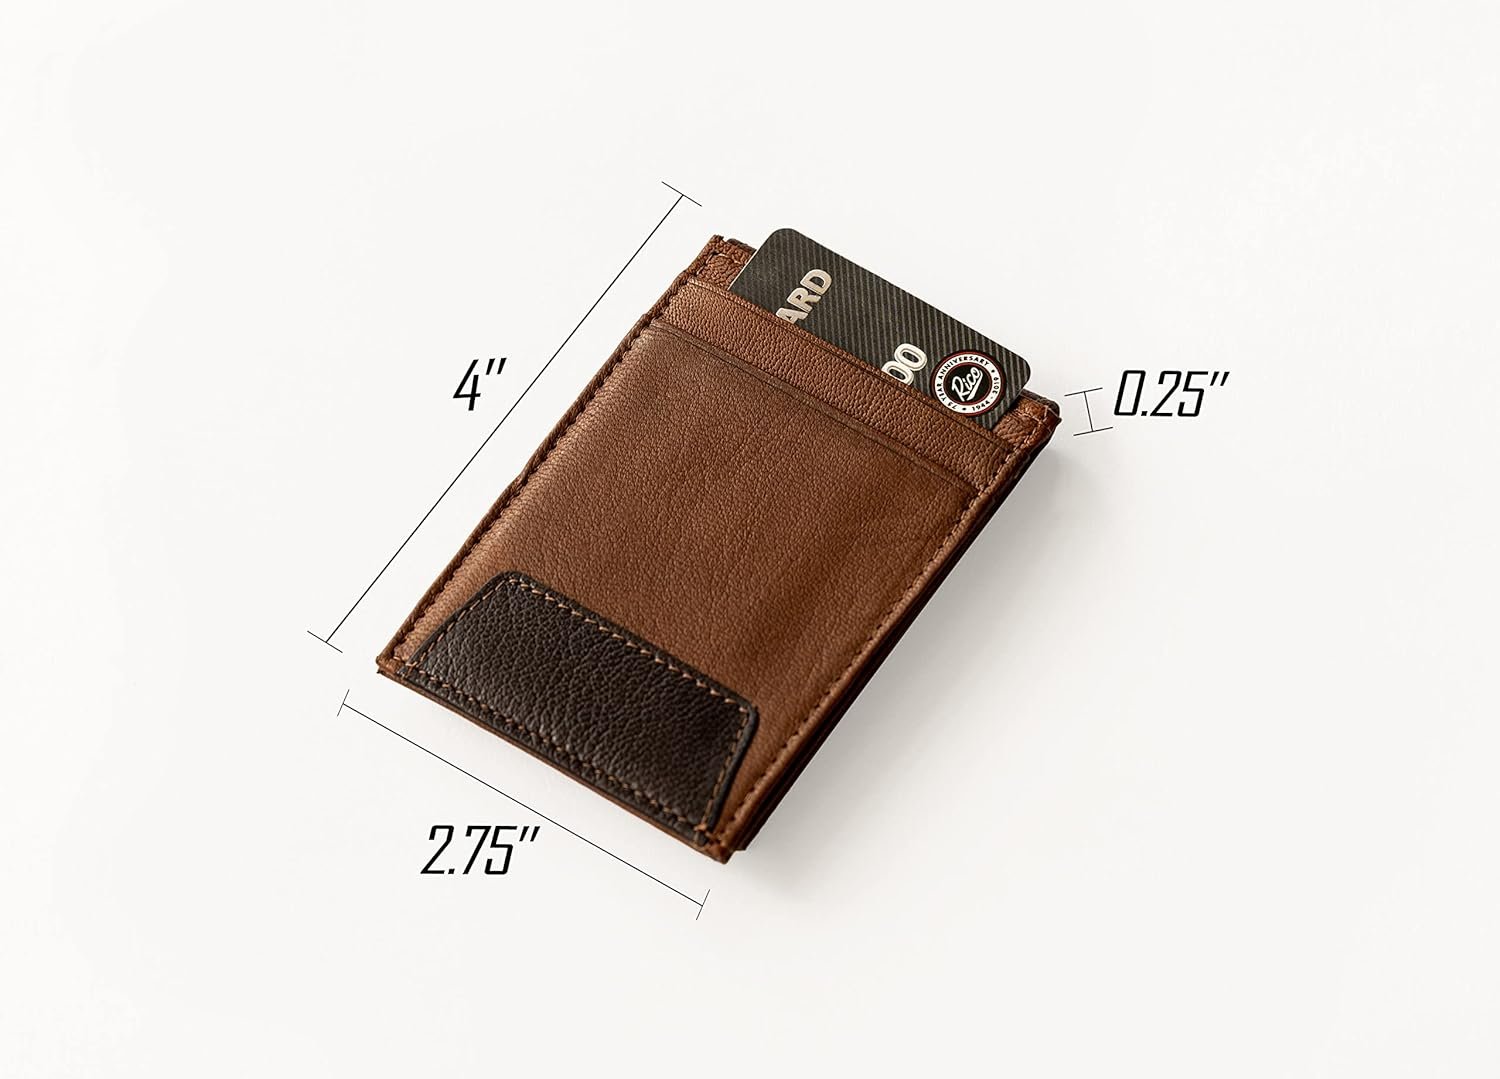 Oklahoma City Thunder Premium Black Leather Wallet, Front Pocket Magnetic Money Clip, Laser Engraved, Vegan